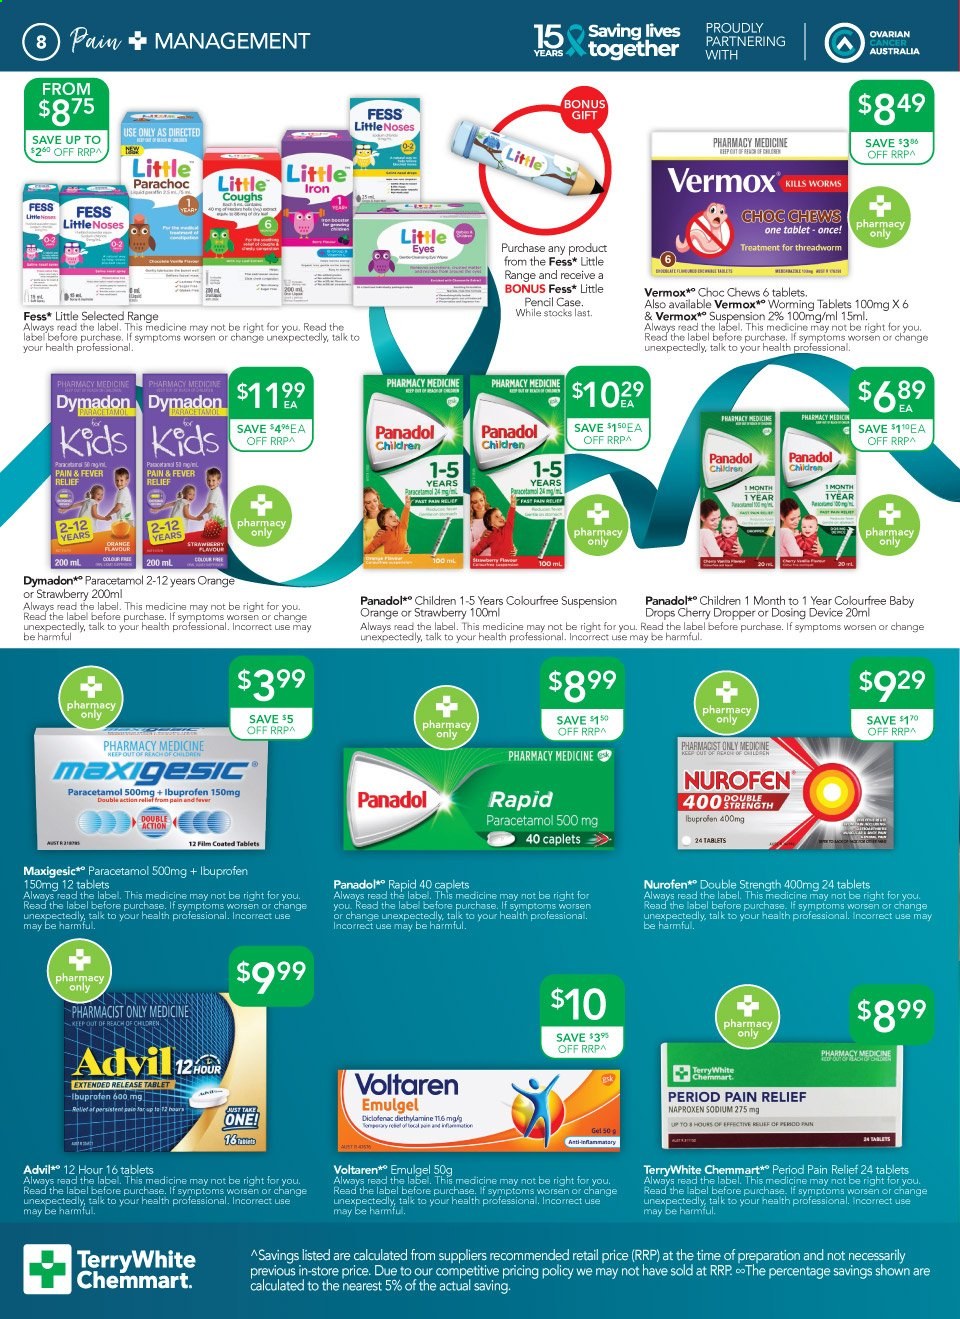 thumbnail - TerryWhite Chemmart Catalogue - 11 Feb 2021 - 2 Mar 2021 - Sales products - pain relief, Advil Rapid, Nurofen, Ibuprofen. Page 8.